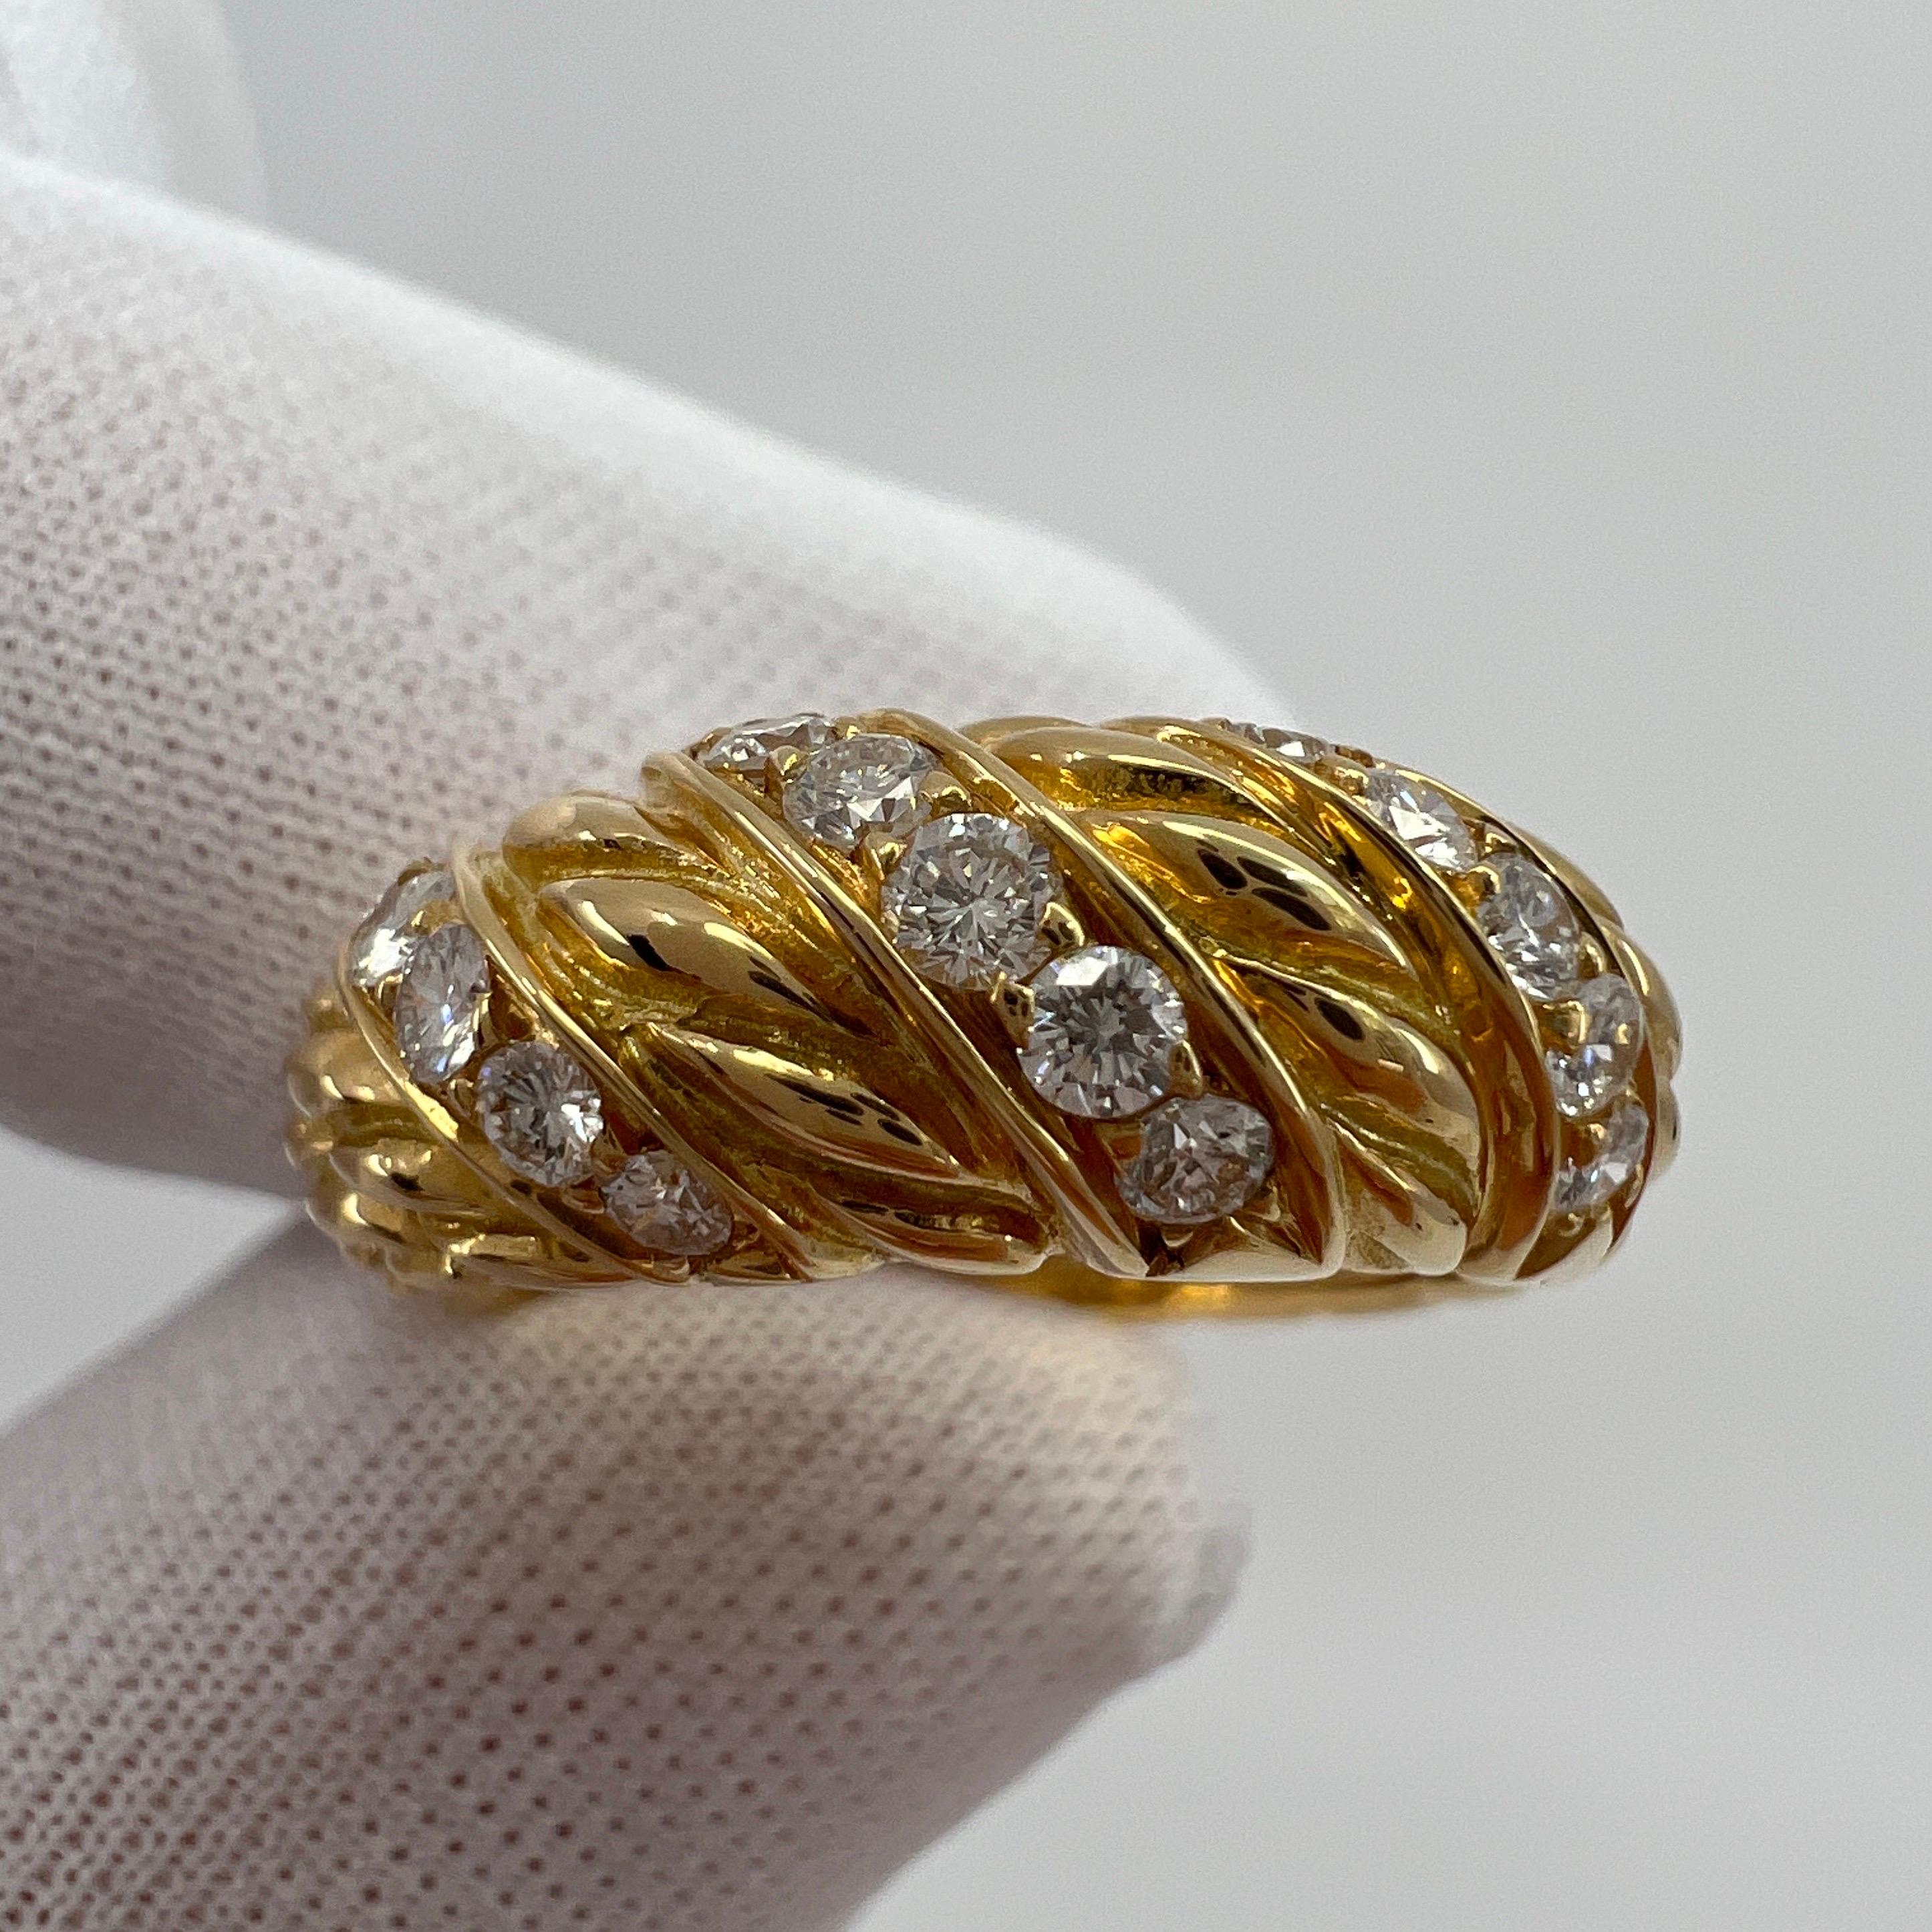 Round Cut Rare Vintage Van Cleef & Arpels Diamond 18k Yellow Gold Twist Rope Ring with Box